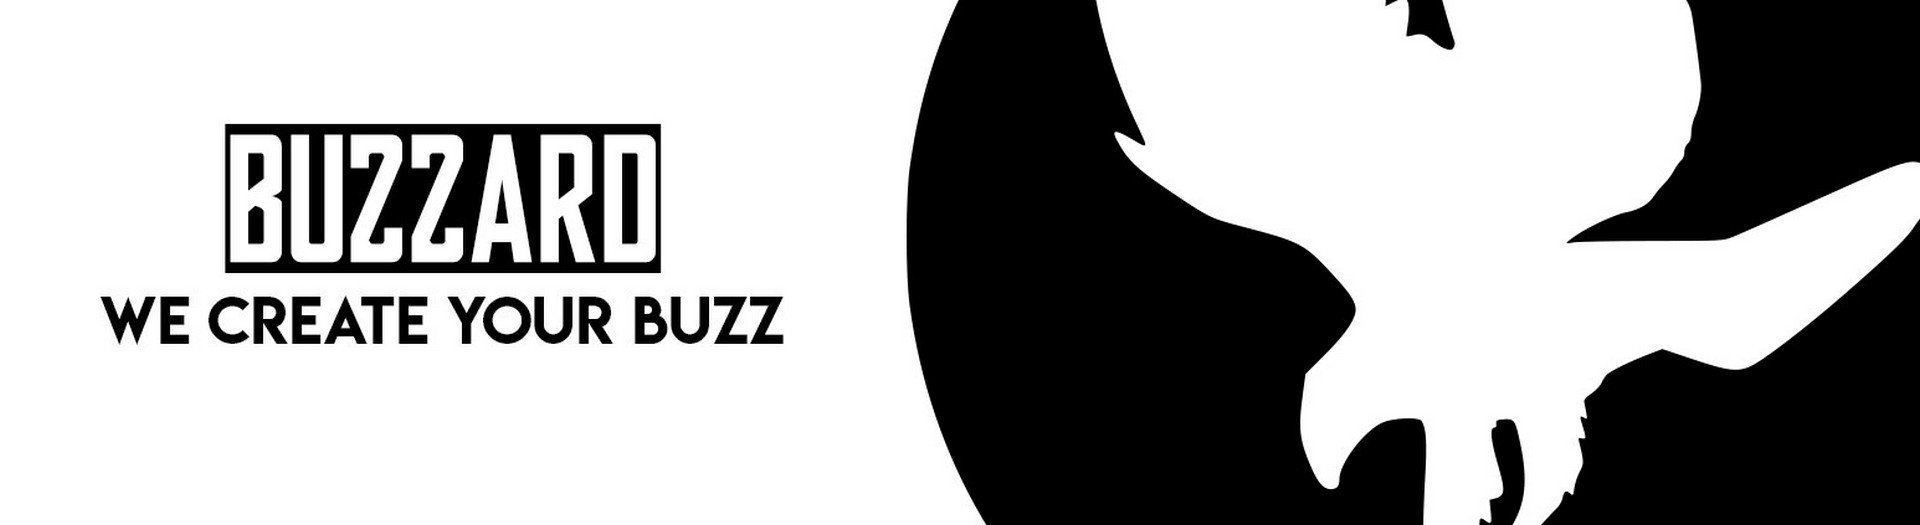 West-Vlaams duo sleutelt aan de perfecte zomerhit - Logo Buzzard 1